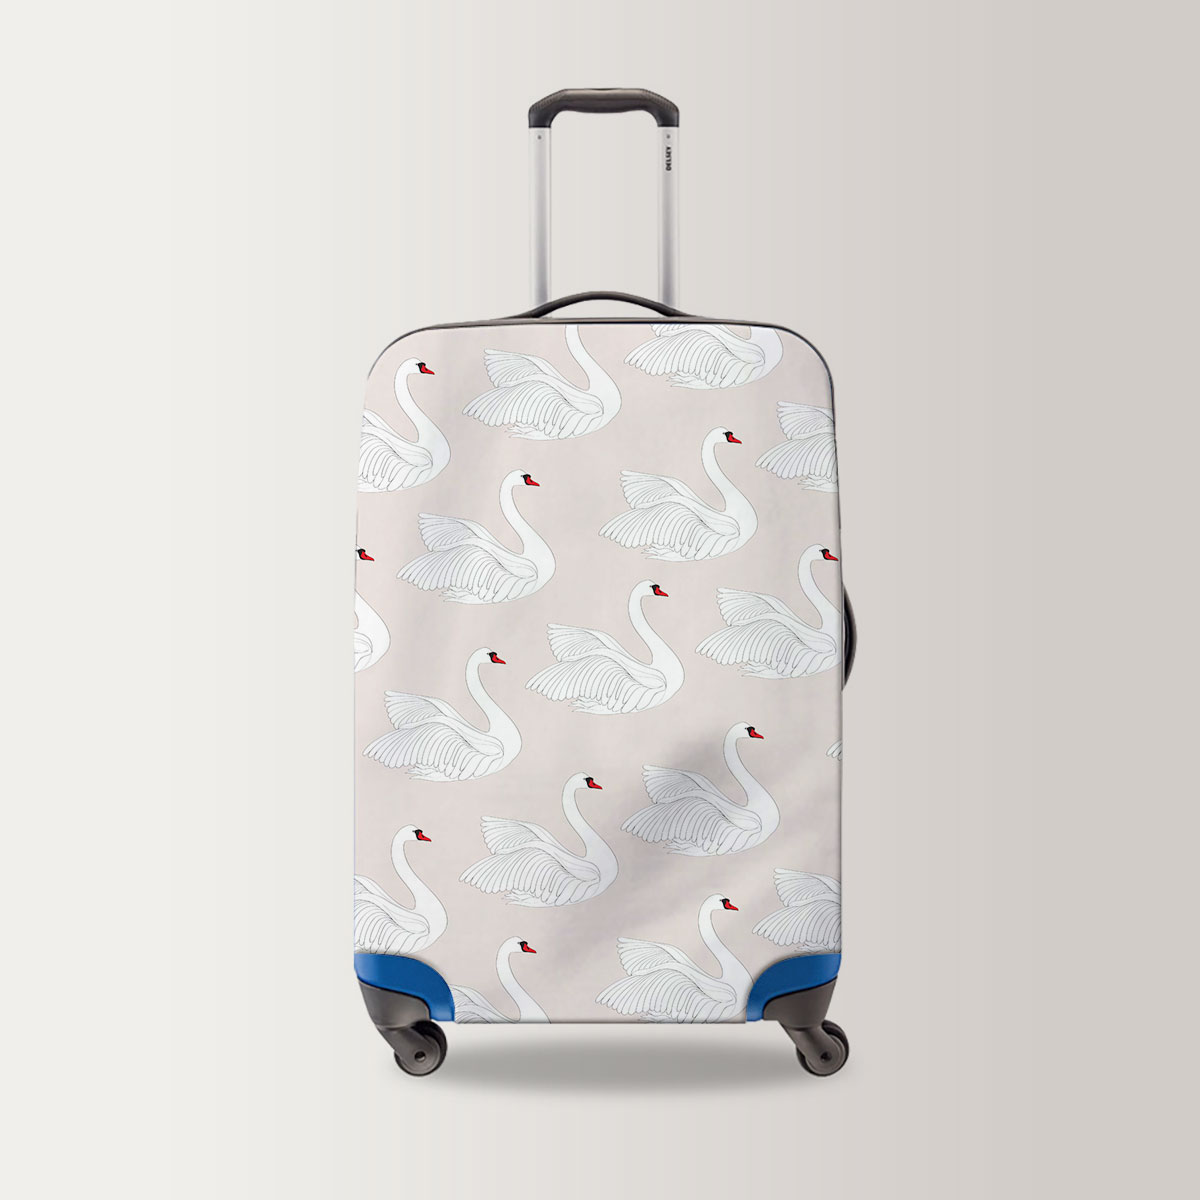 Iconic White Swan Luggage Bag